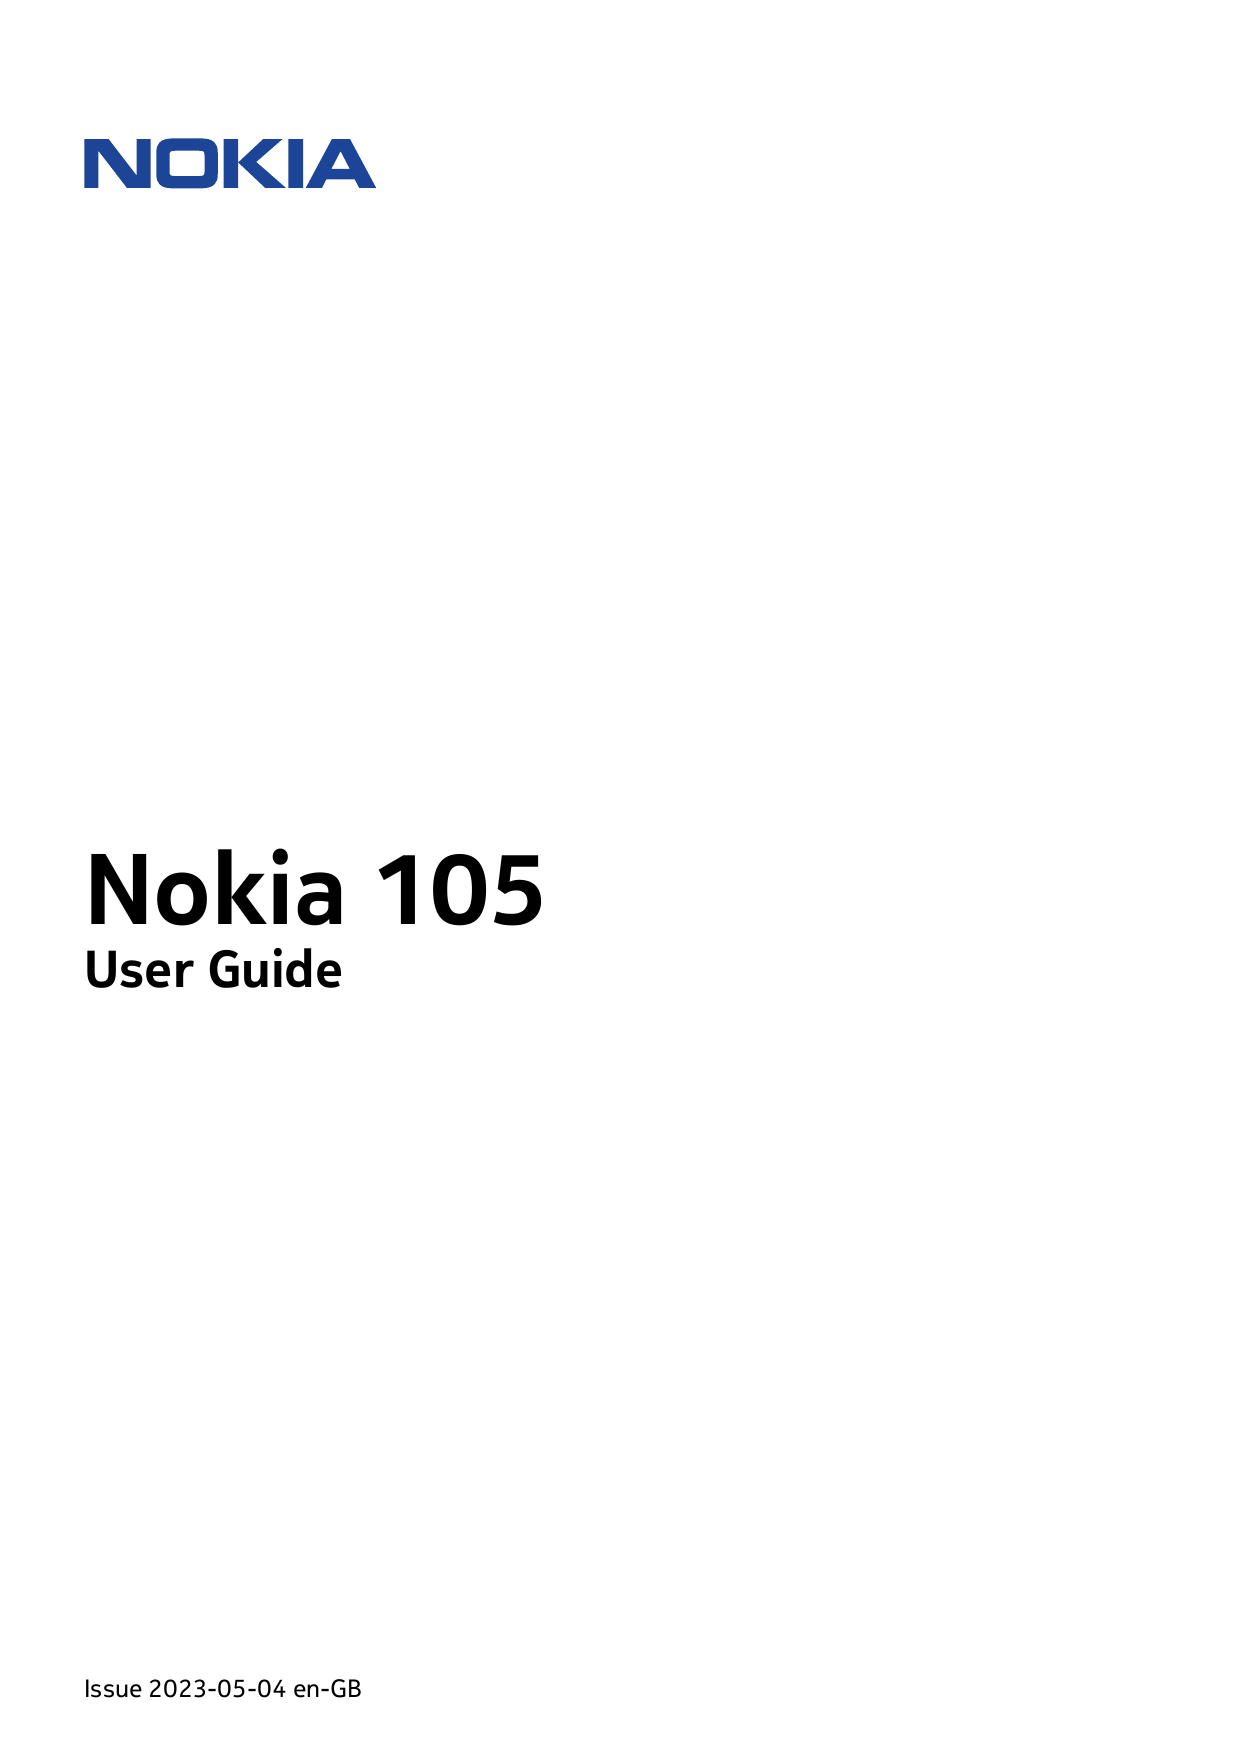 Nokia 105User GuideIssue 2023-05-04 en-GB